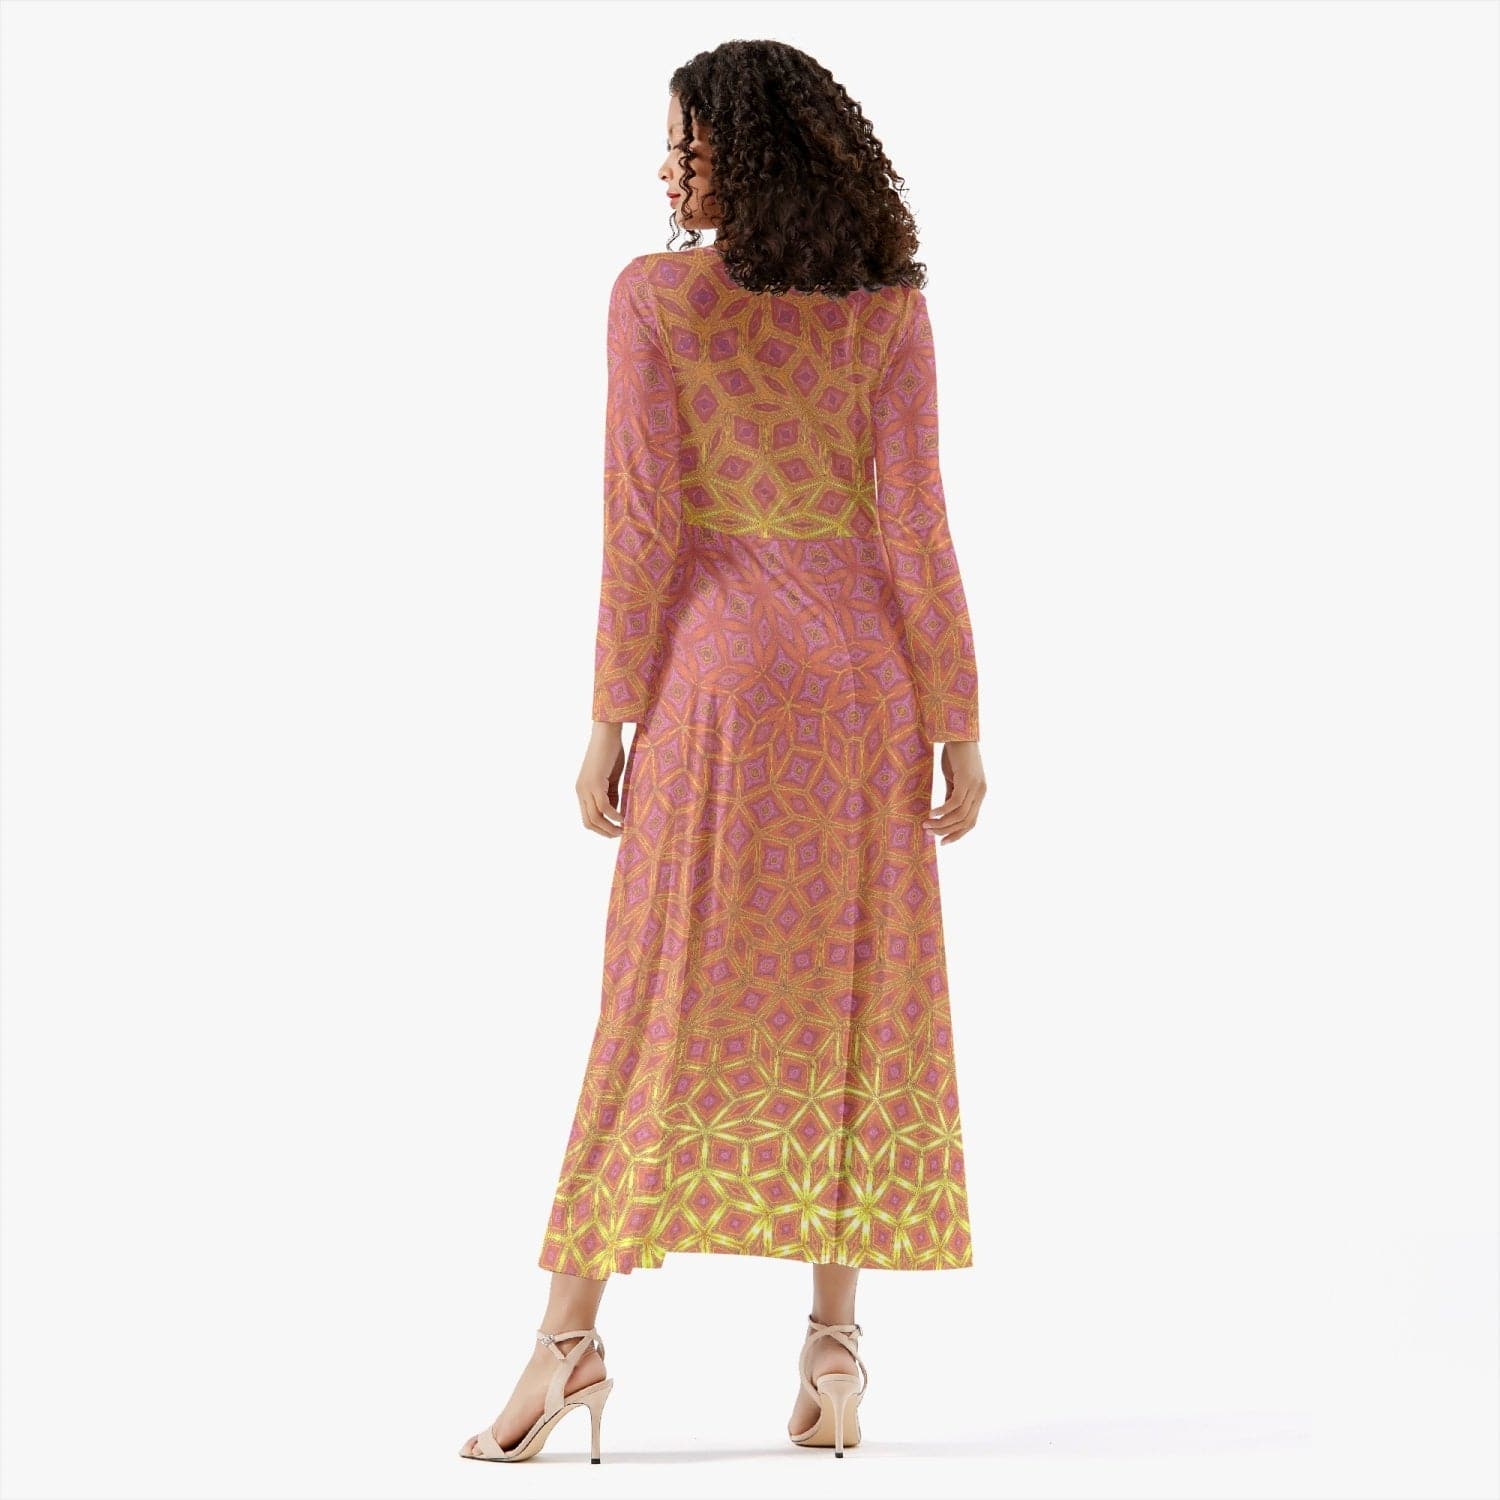 Sunrise at the Lake, Women's Long-Sleeve Trendy One-piece Dress, by Sensus Studio Design